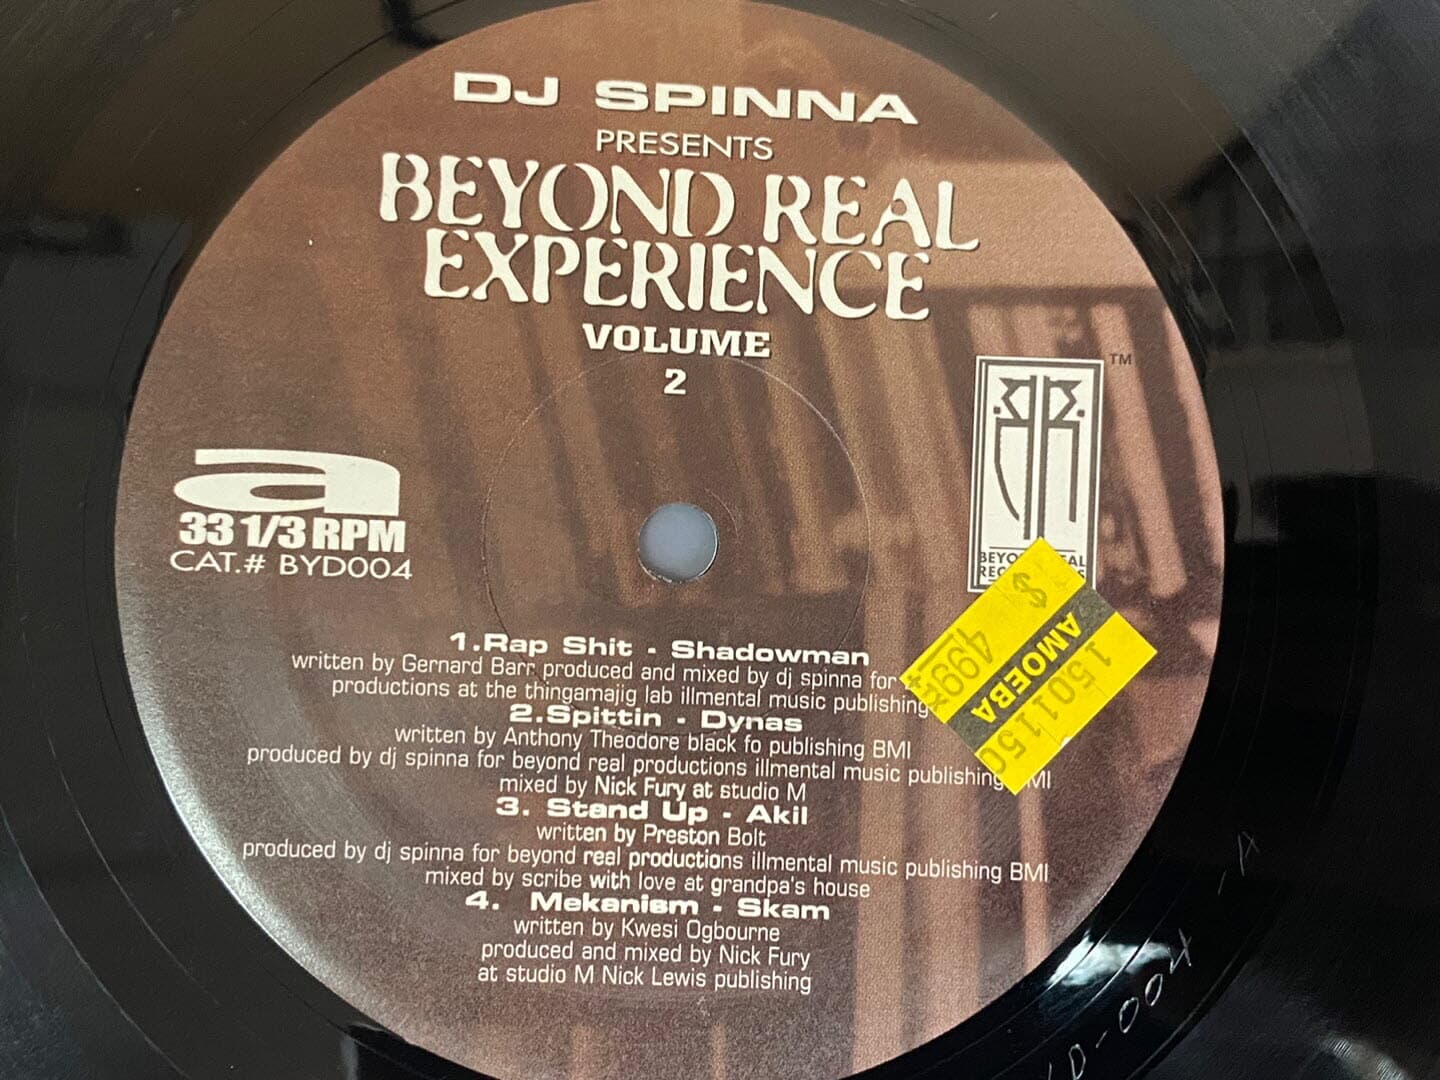 [LP] 디제이 스핀나 - DJ Spinna - Beyond Real Experience Volume 2 2Lps [U.S반]